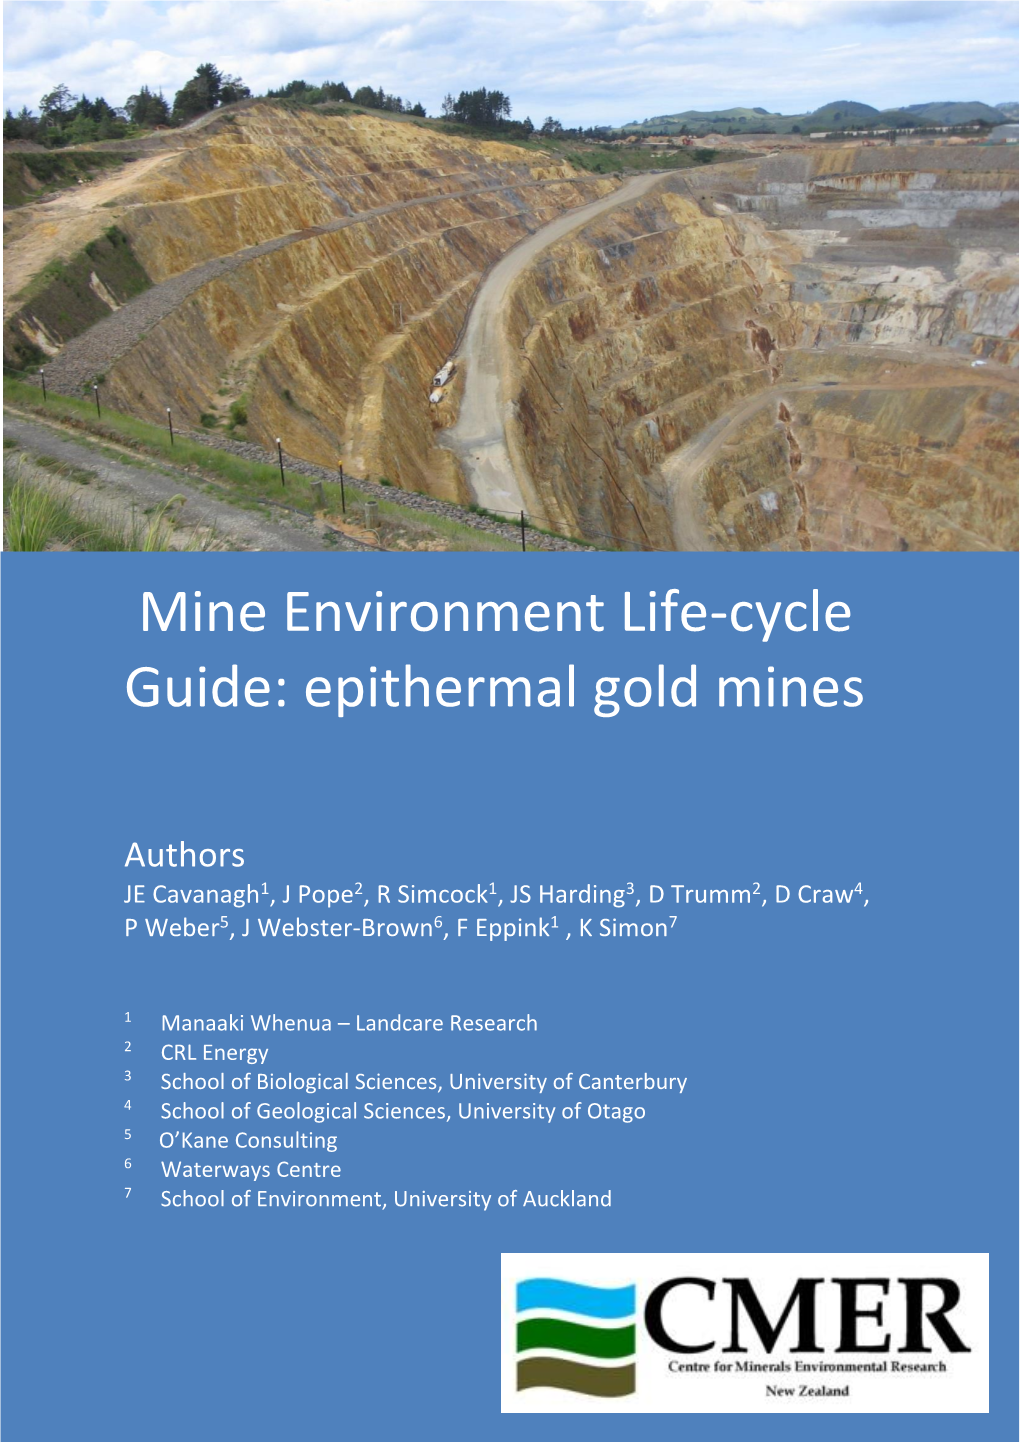 Epithermal Gold Mines